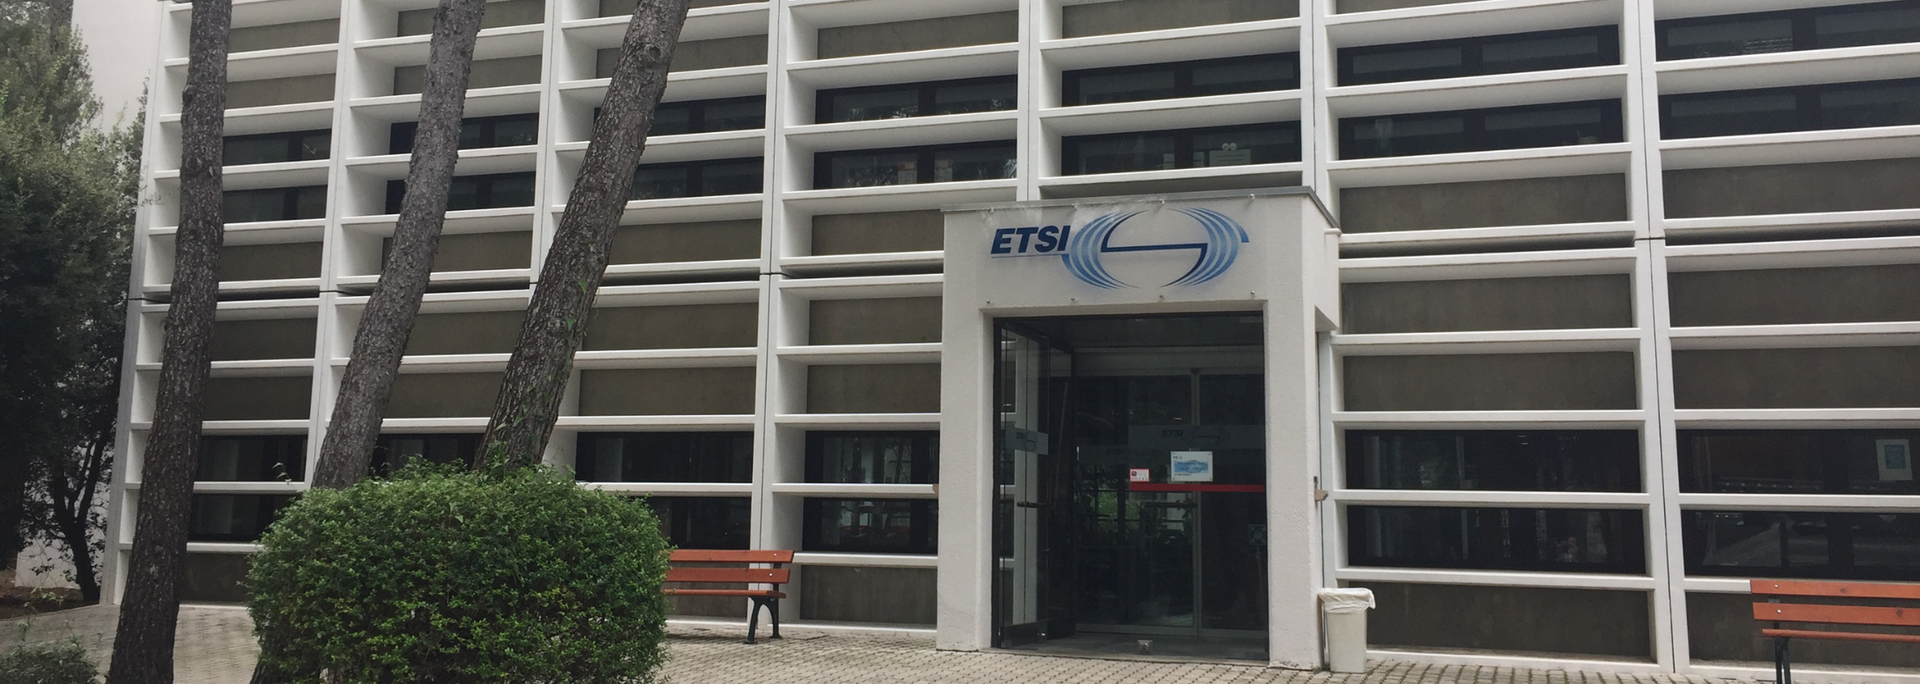 Picture of ETSI headquarters.